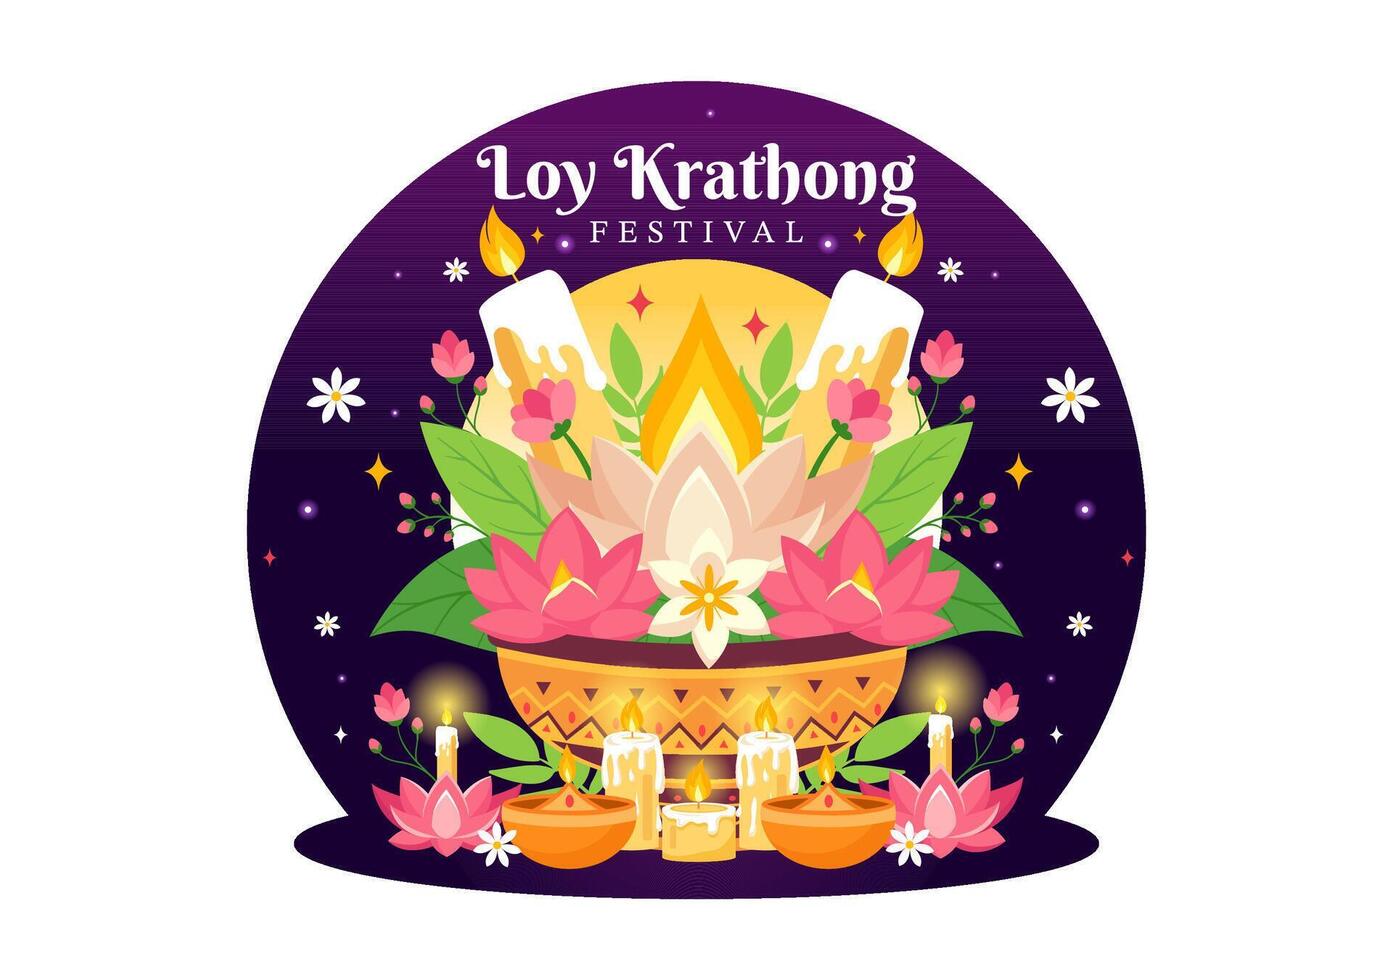 loy krathong vector illustratie van festival viering in Thailand met lantaarns en krathongs drijvend Aan water ontwerp in vlak tekenfilm achtergrond